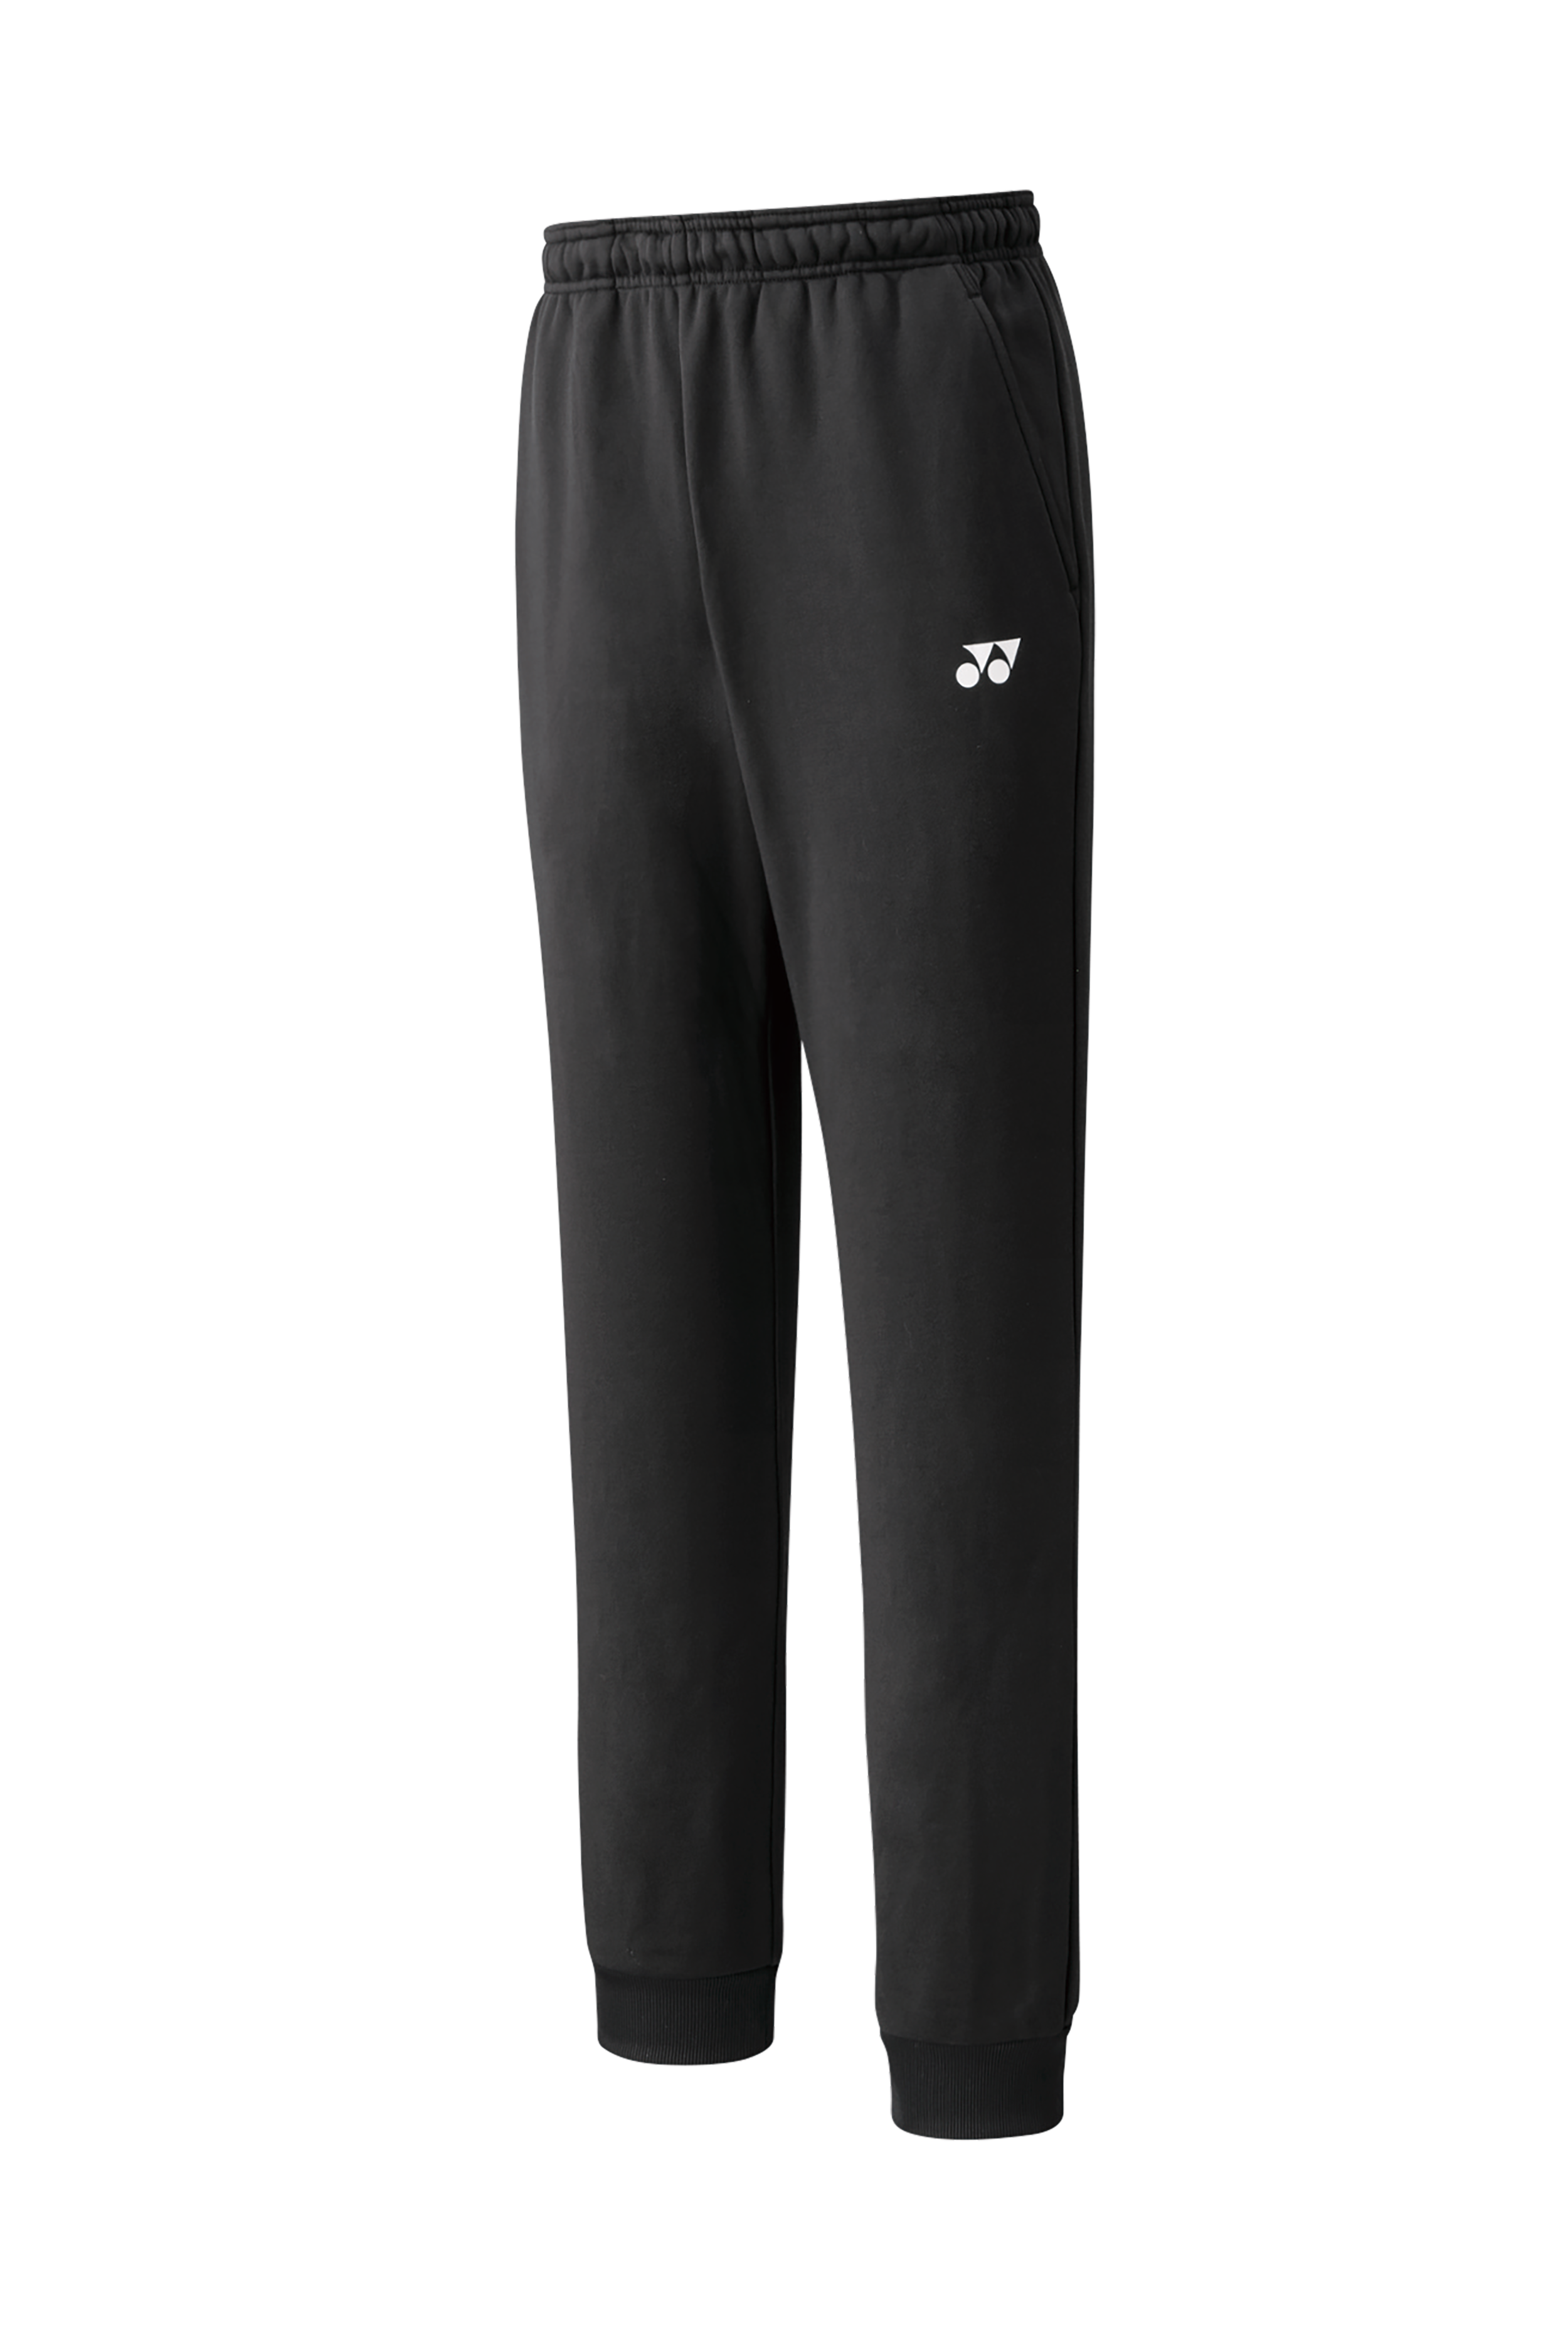 F60: Yonex black baggy pants. Unisex, superb fit!! // W32-36; L43 ⋒ mine⁣⁣  500 ⋒ steal 550 🪡 we also offer alteration servic... | Instagram